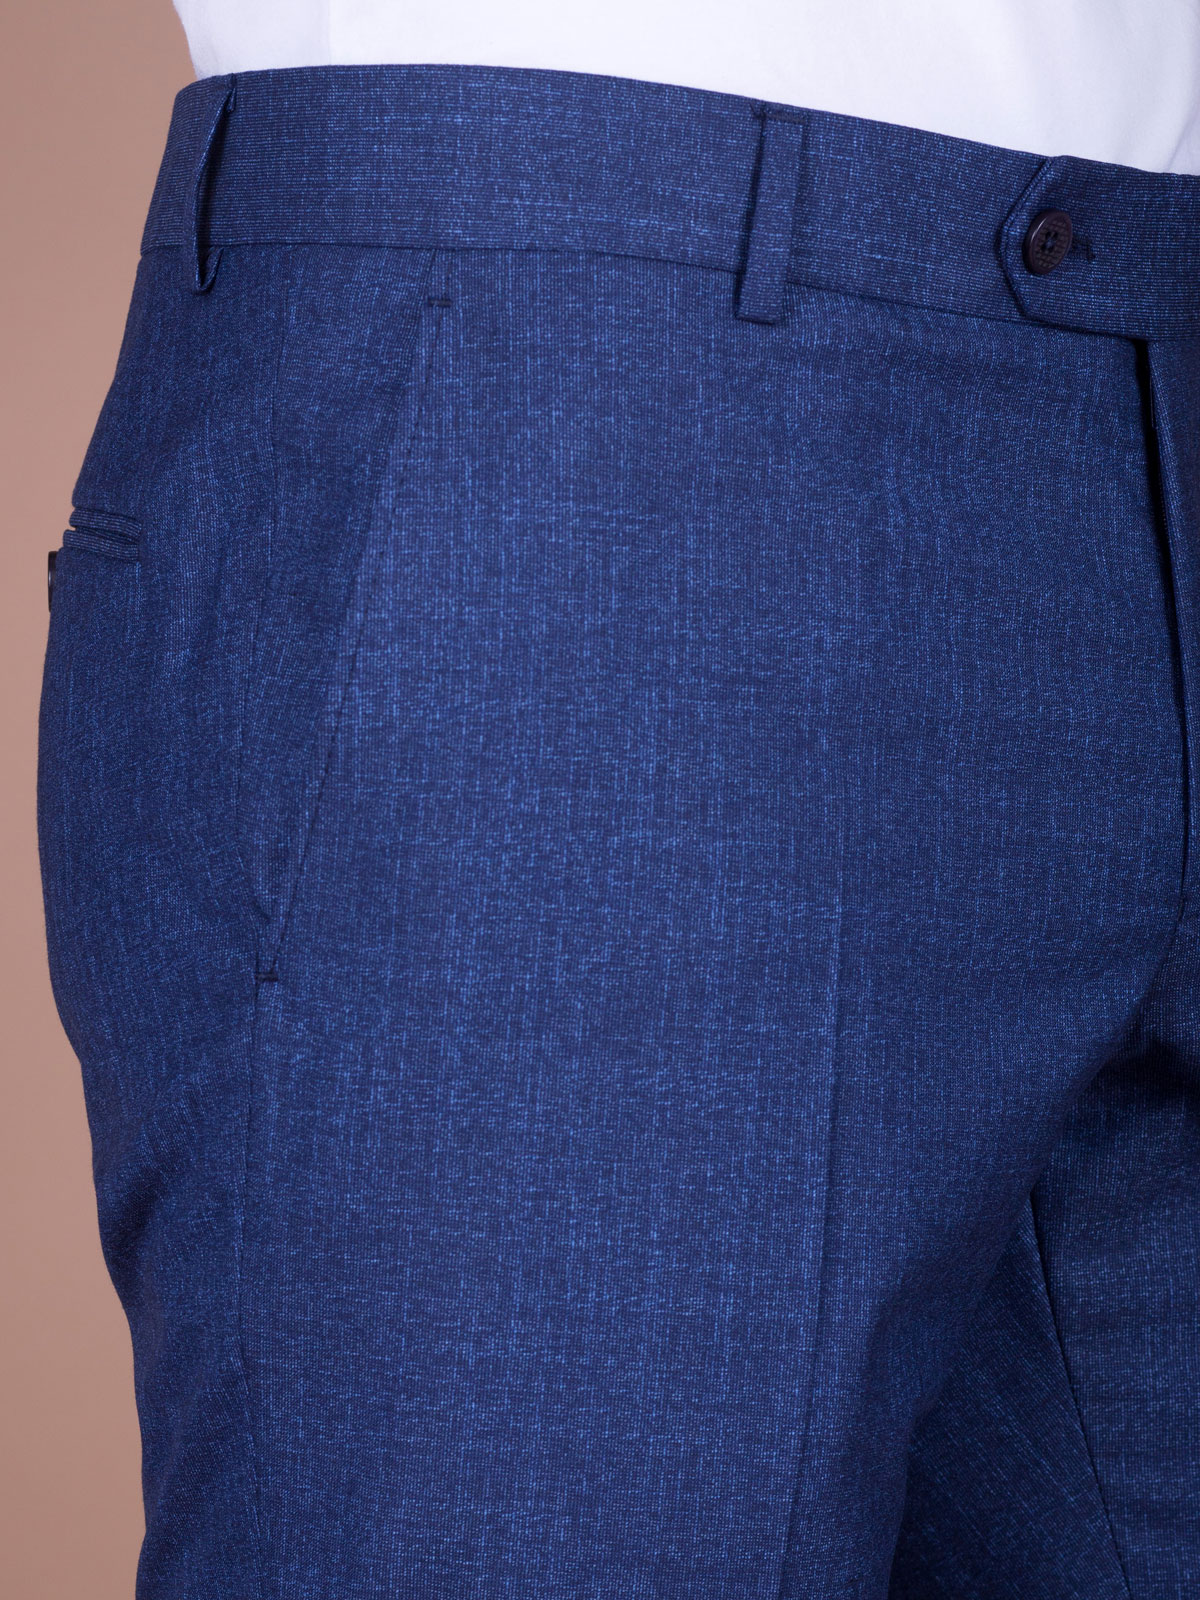  pants navy blue melange  - 63208 € 24.75 img3